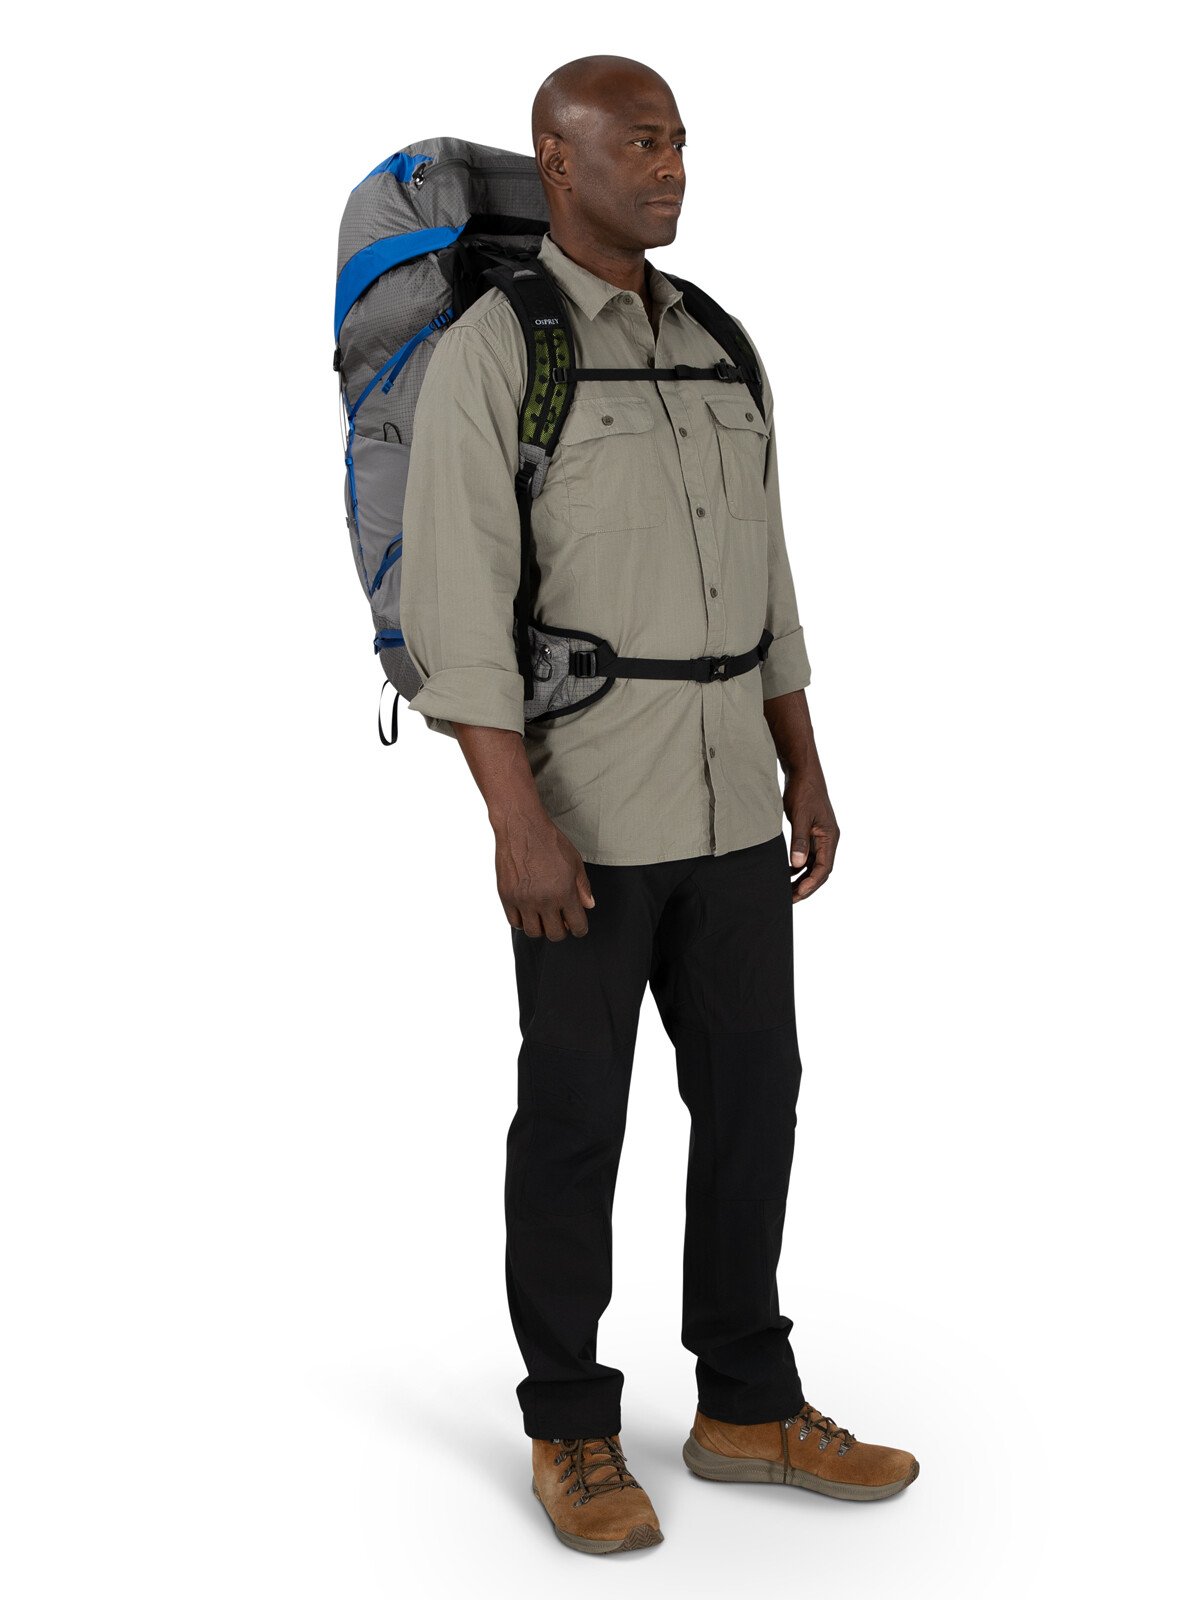 Osprey - Exos Pro 55 Expedition Backpack (Men's)